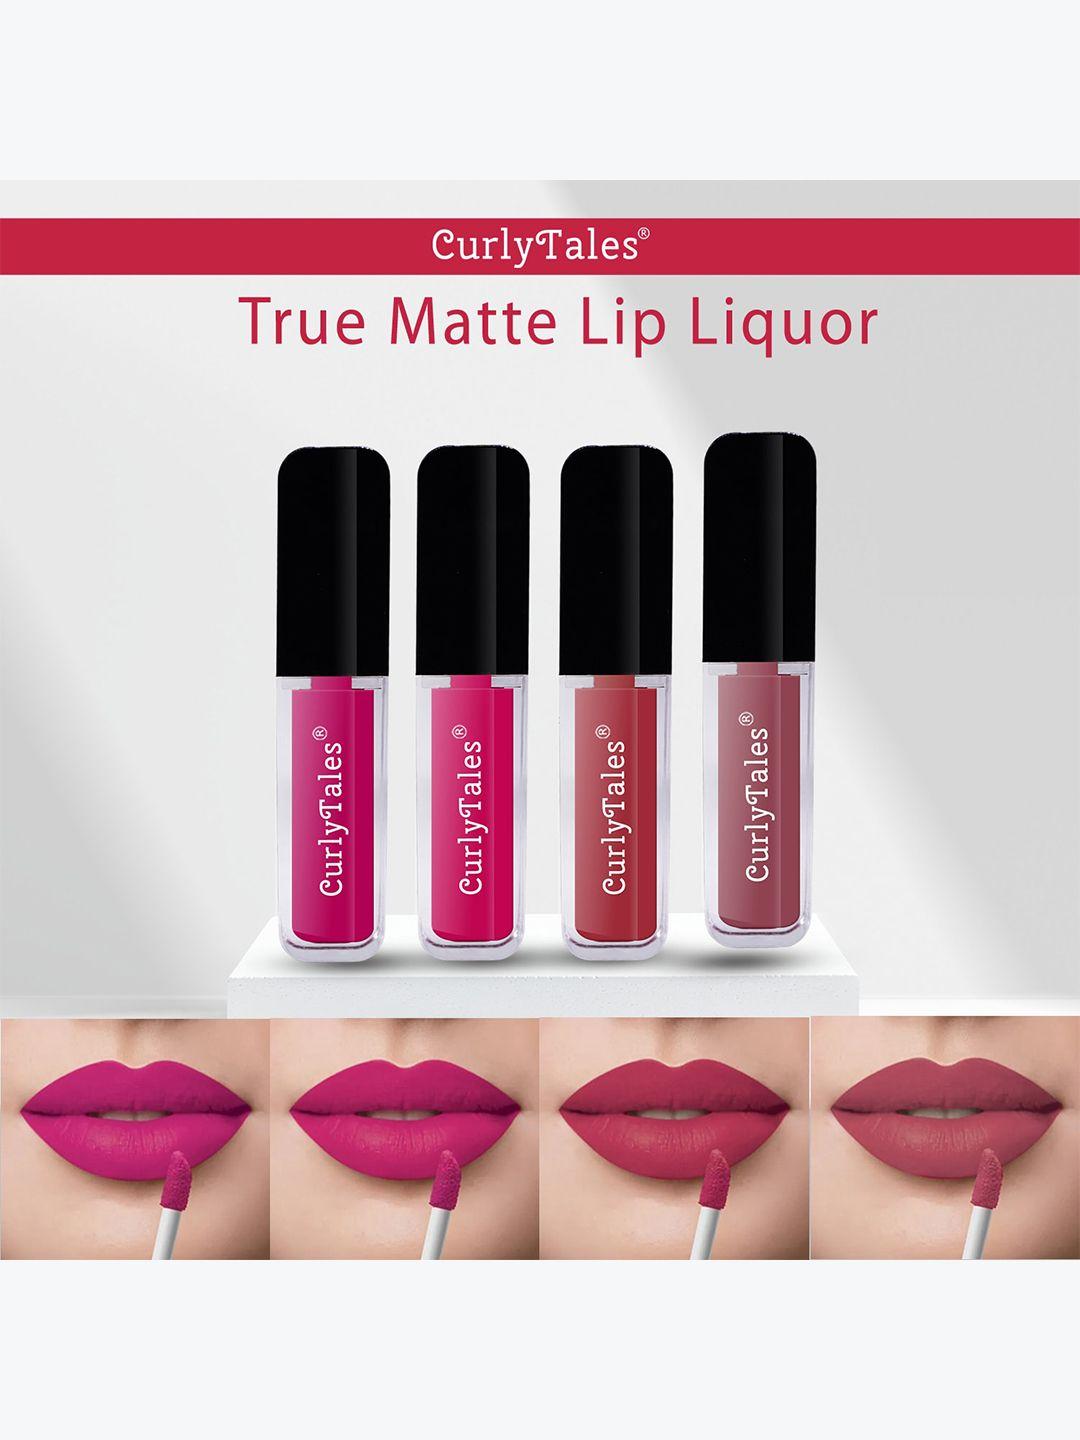 curlytales set of 4 matte smooth light on lips liquid lipsticks 12ml each